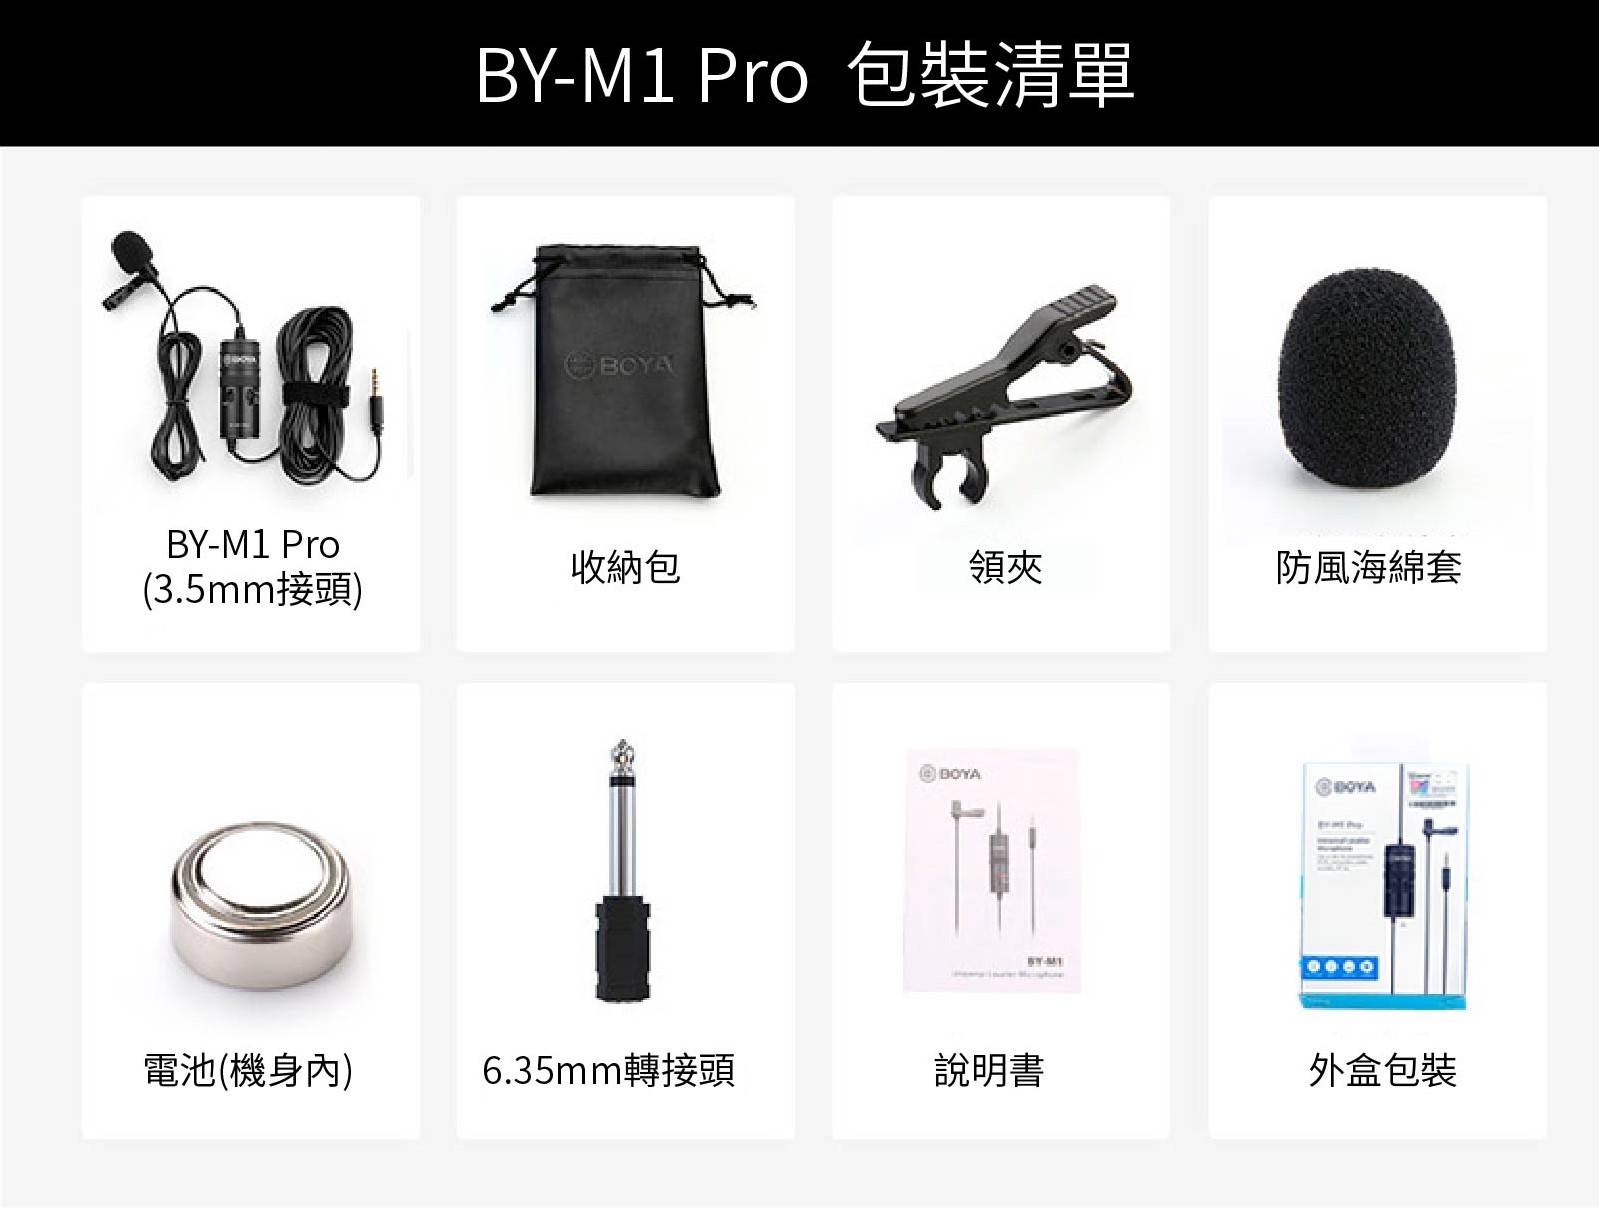 BOYA BY-M1 PRO 3.5mm 通用型 領夾式麥克風 監聽回放功能